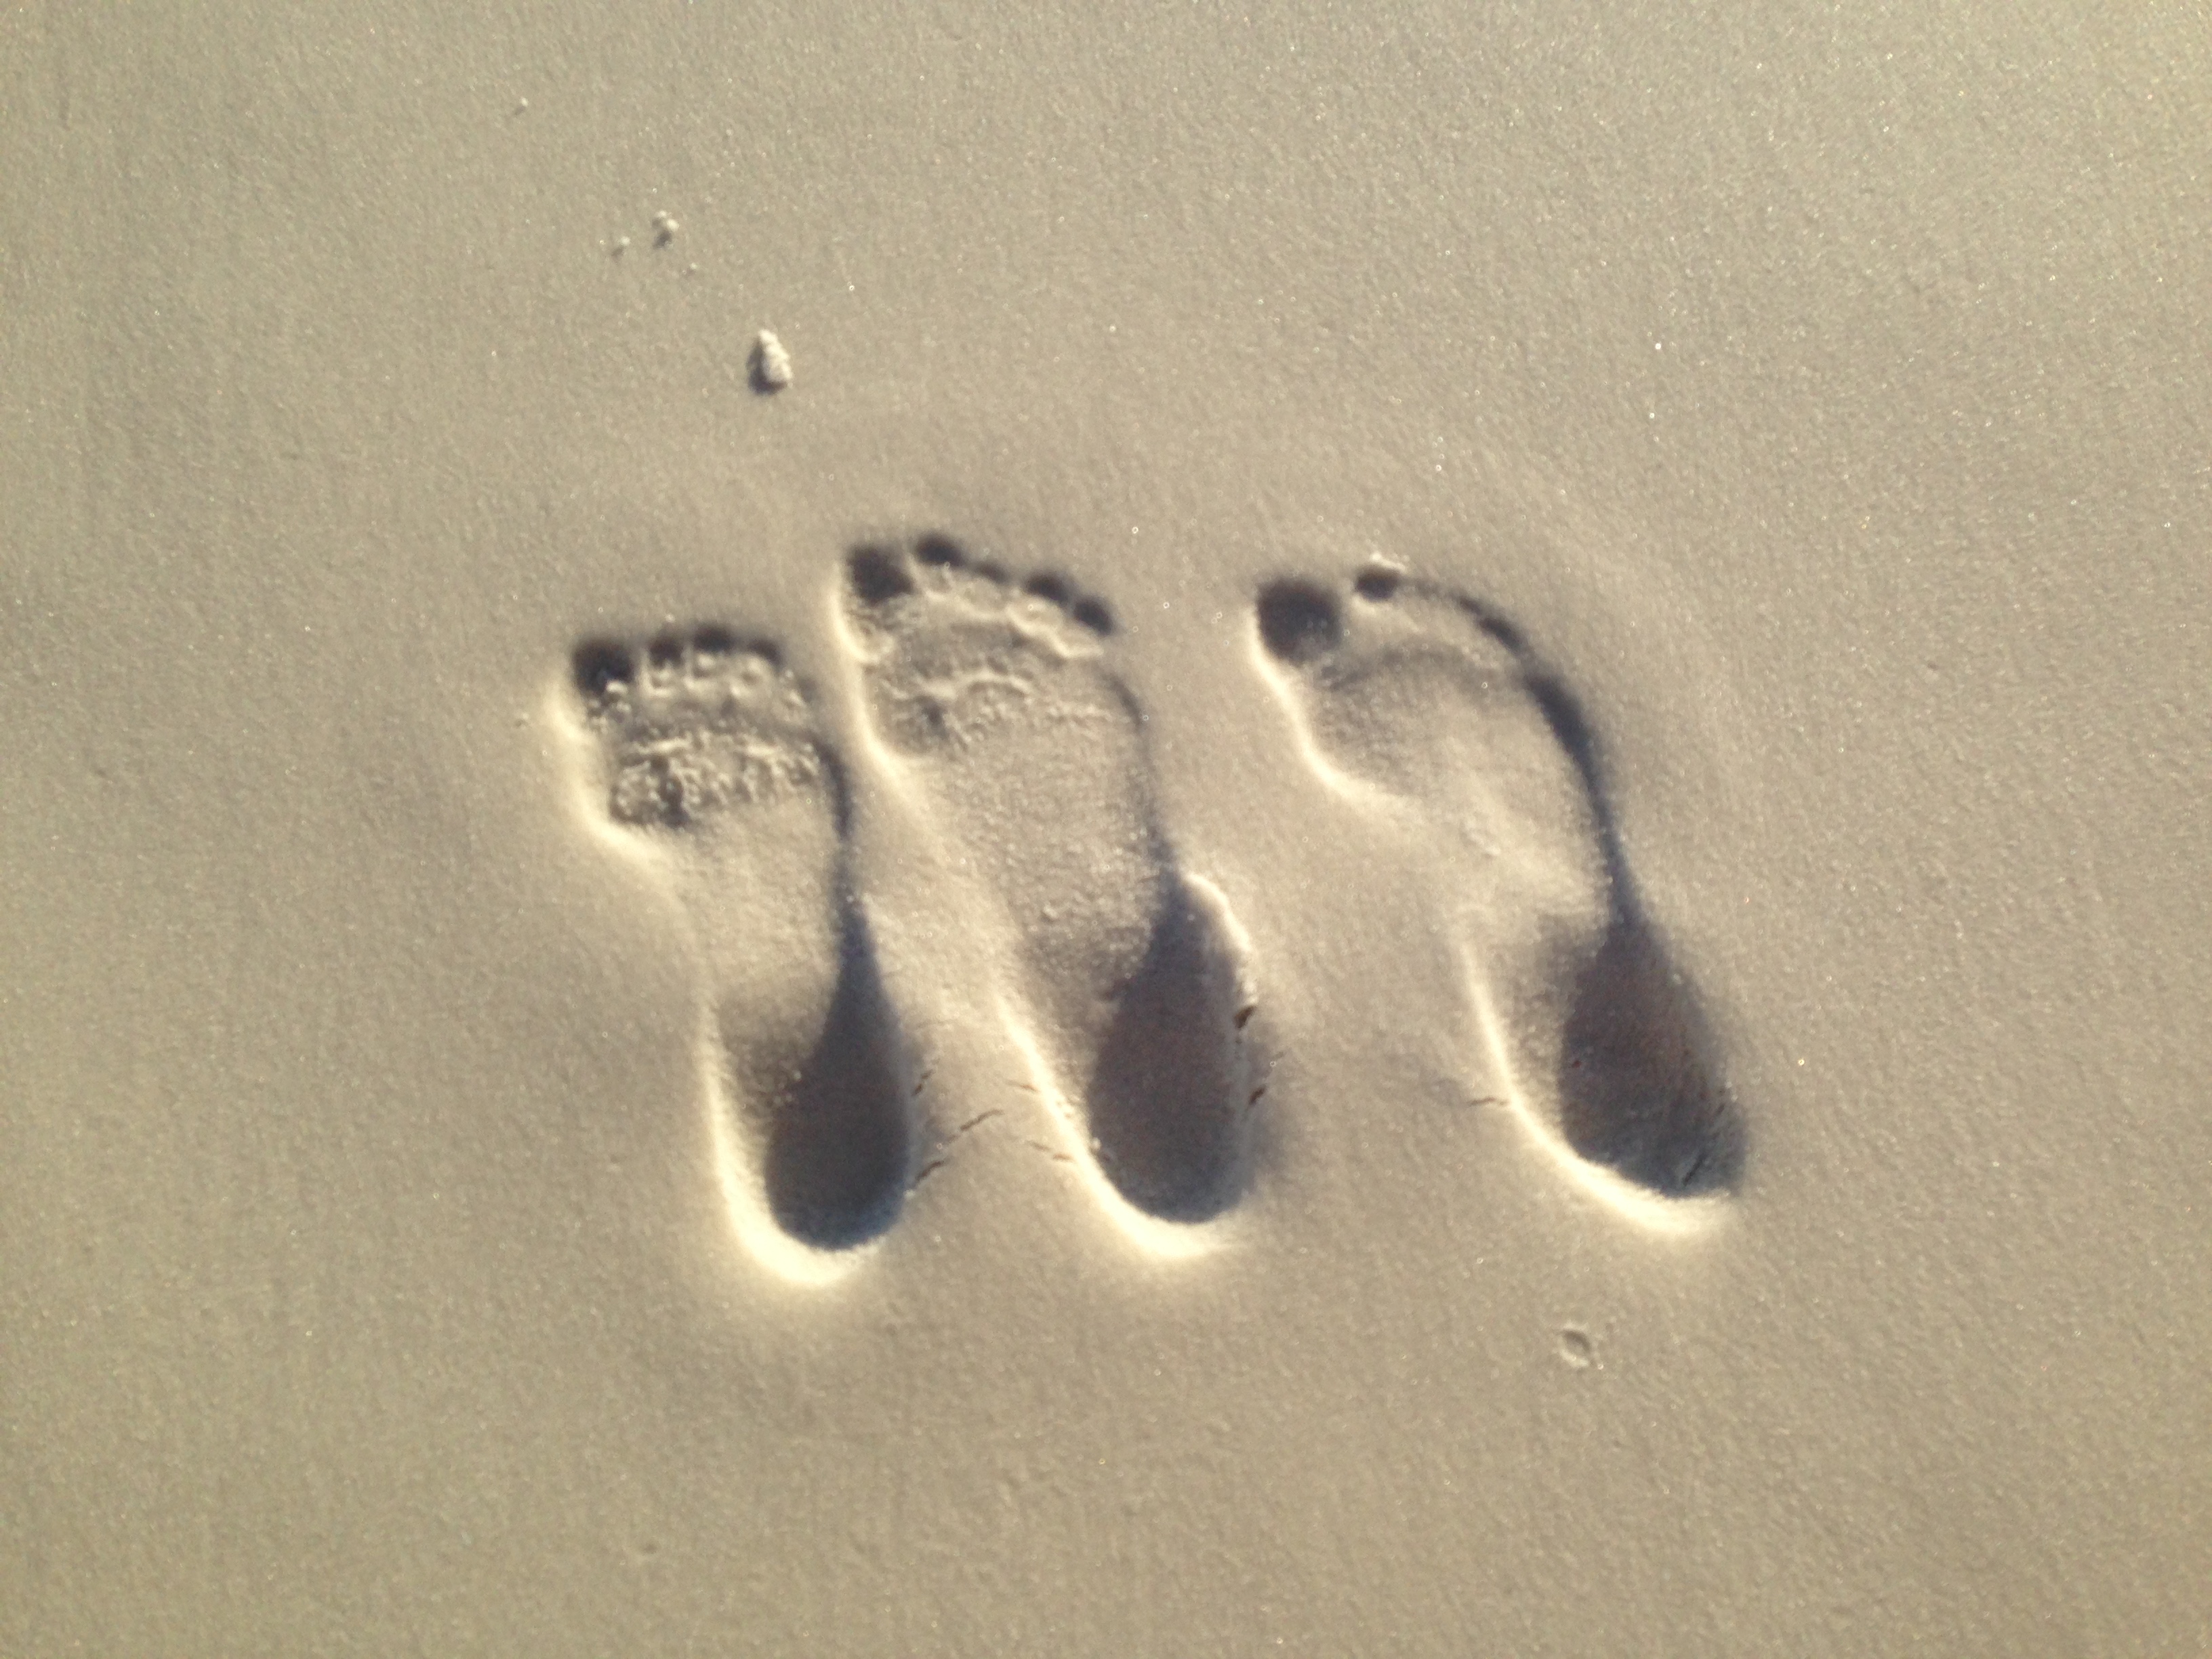 footprints-in-sand-10-16